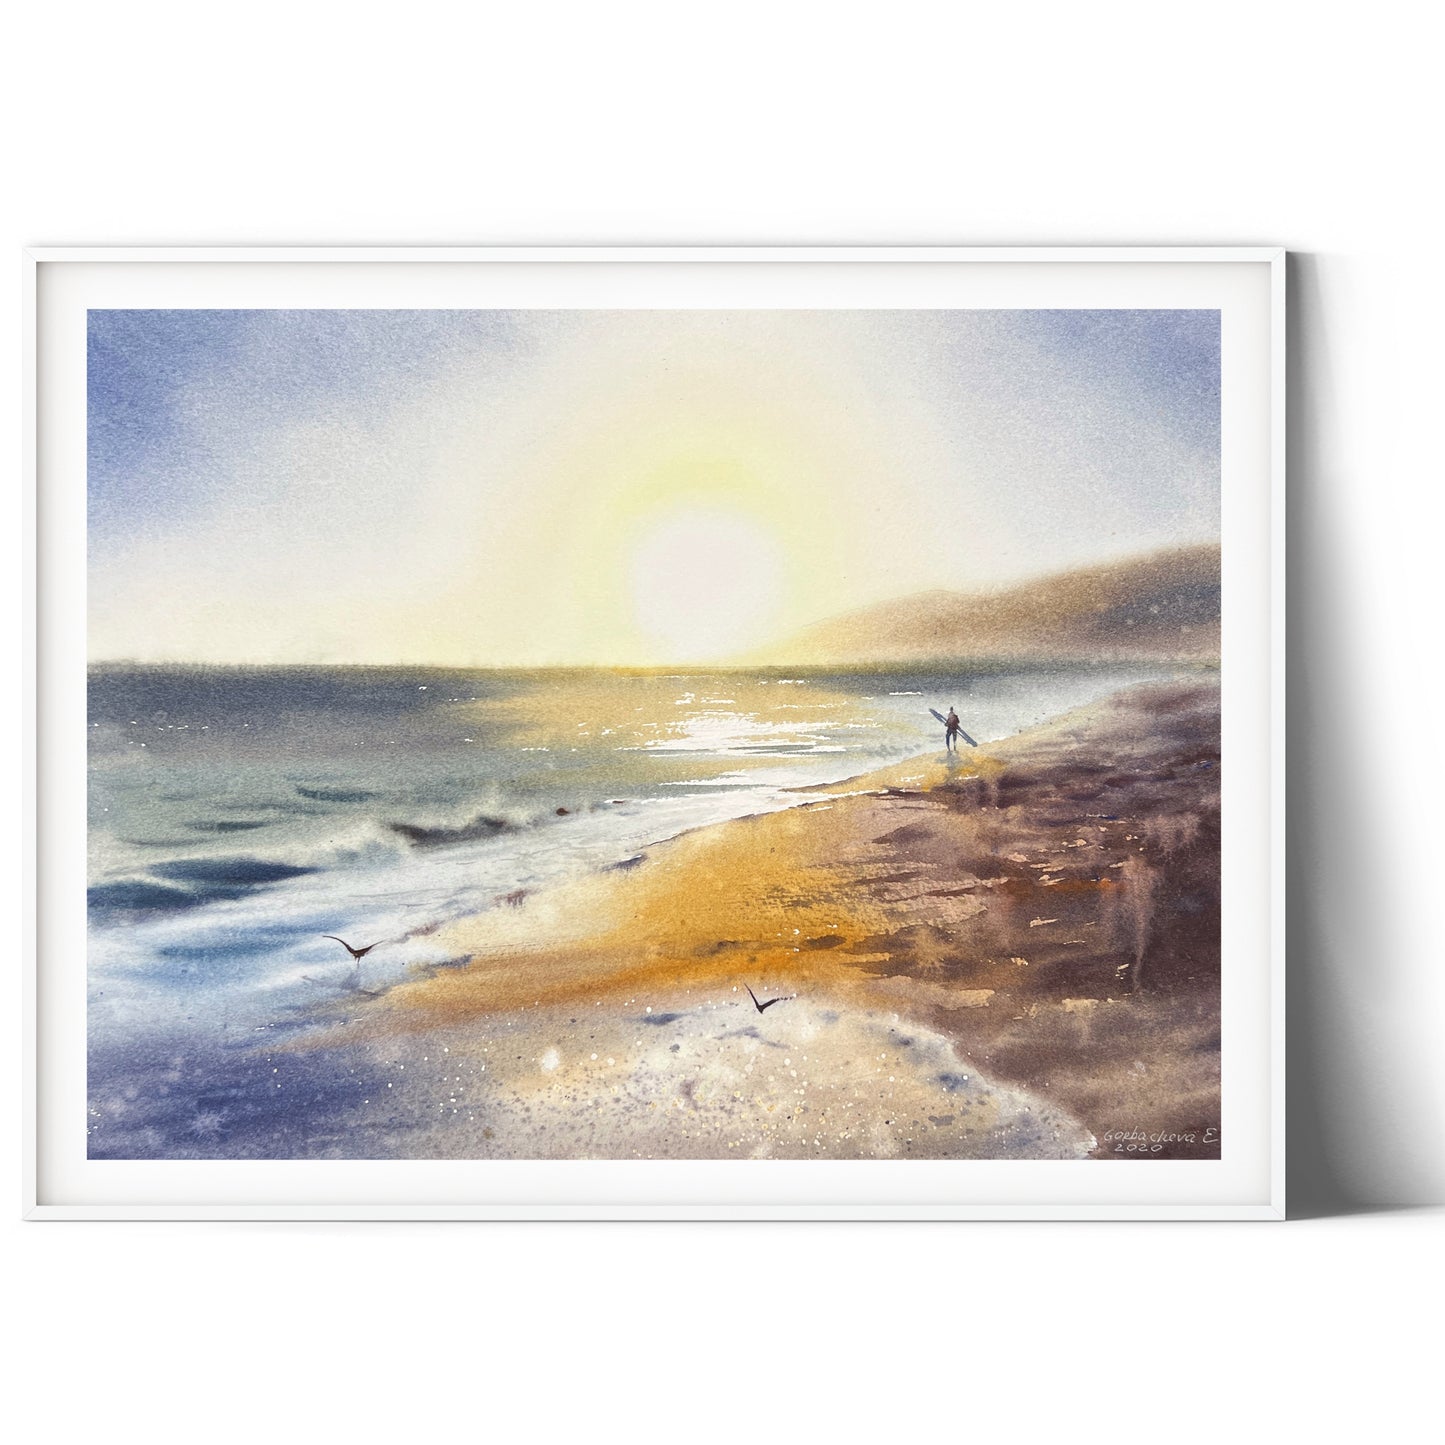 Original Watercolor Painting - "Surfer by the Ocean" - 16x12 in Ocean Art